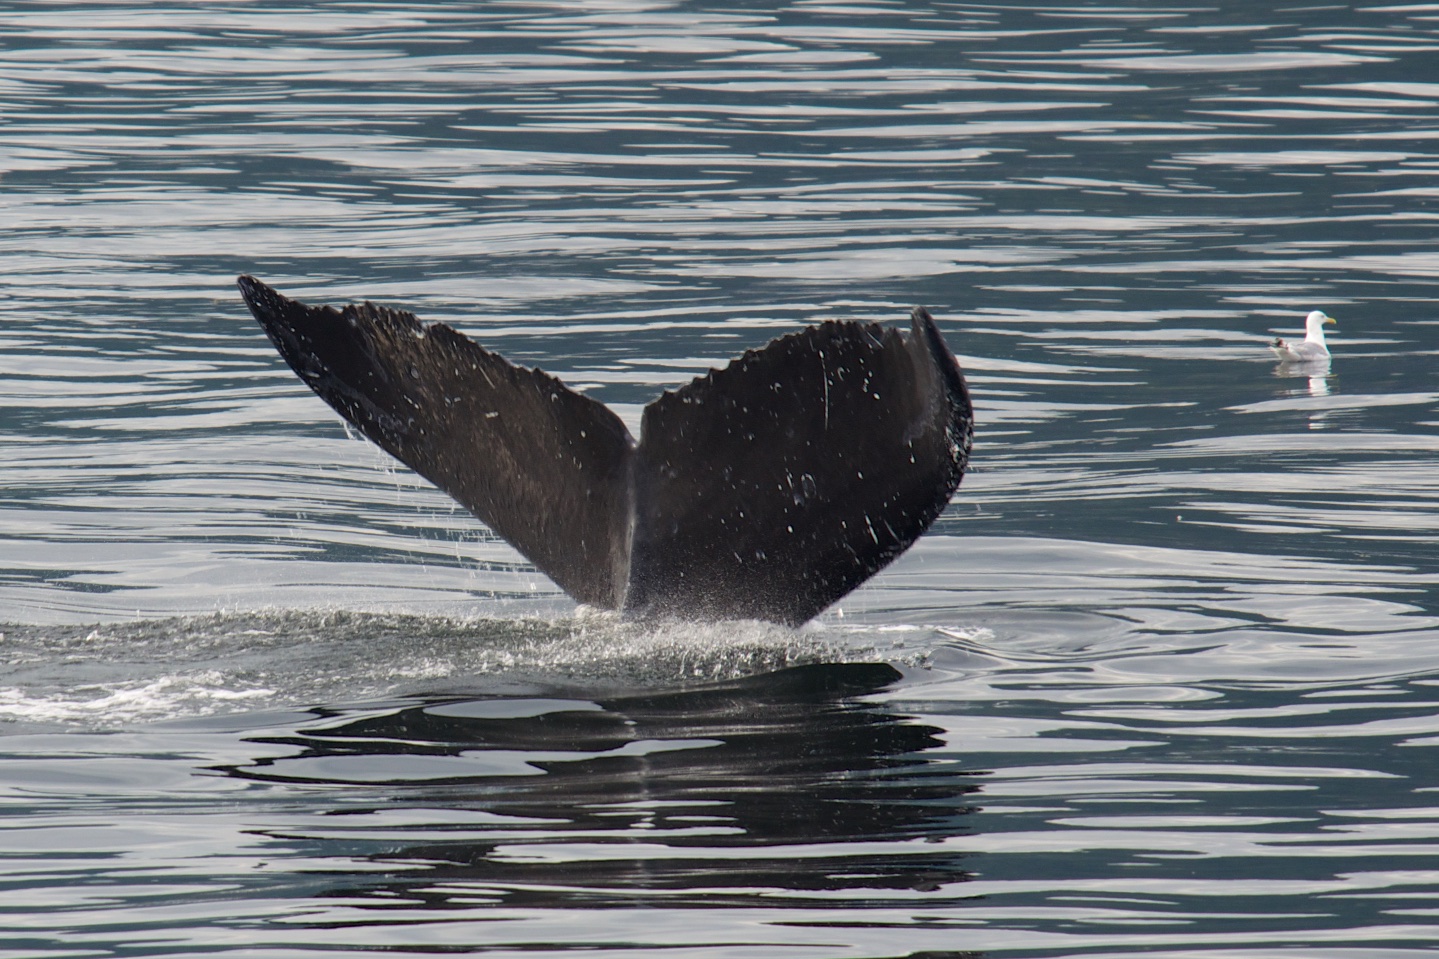  Humpback whale tail, Chatham Strait, Alaska 